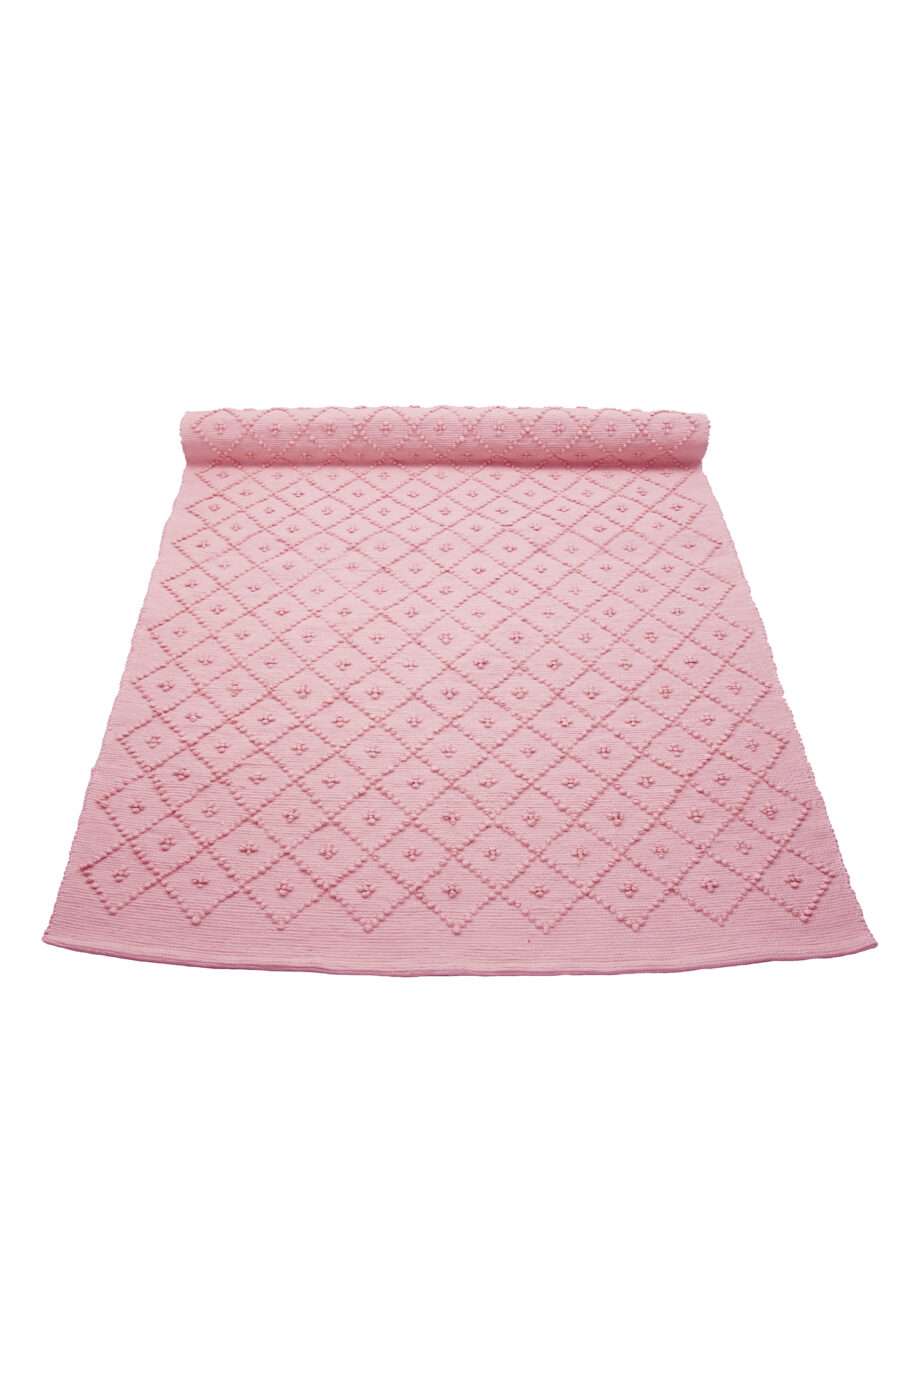 diamond fluor pink woven cotton rug large